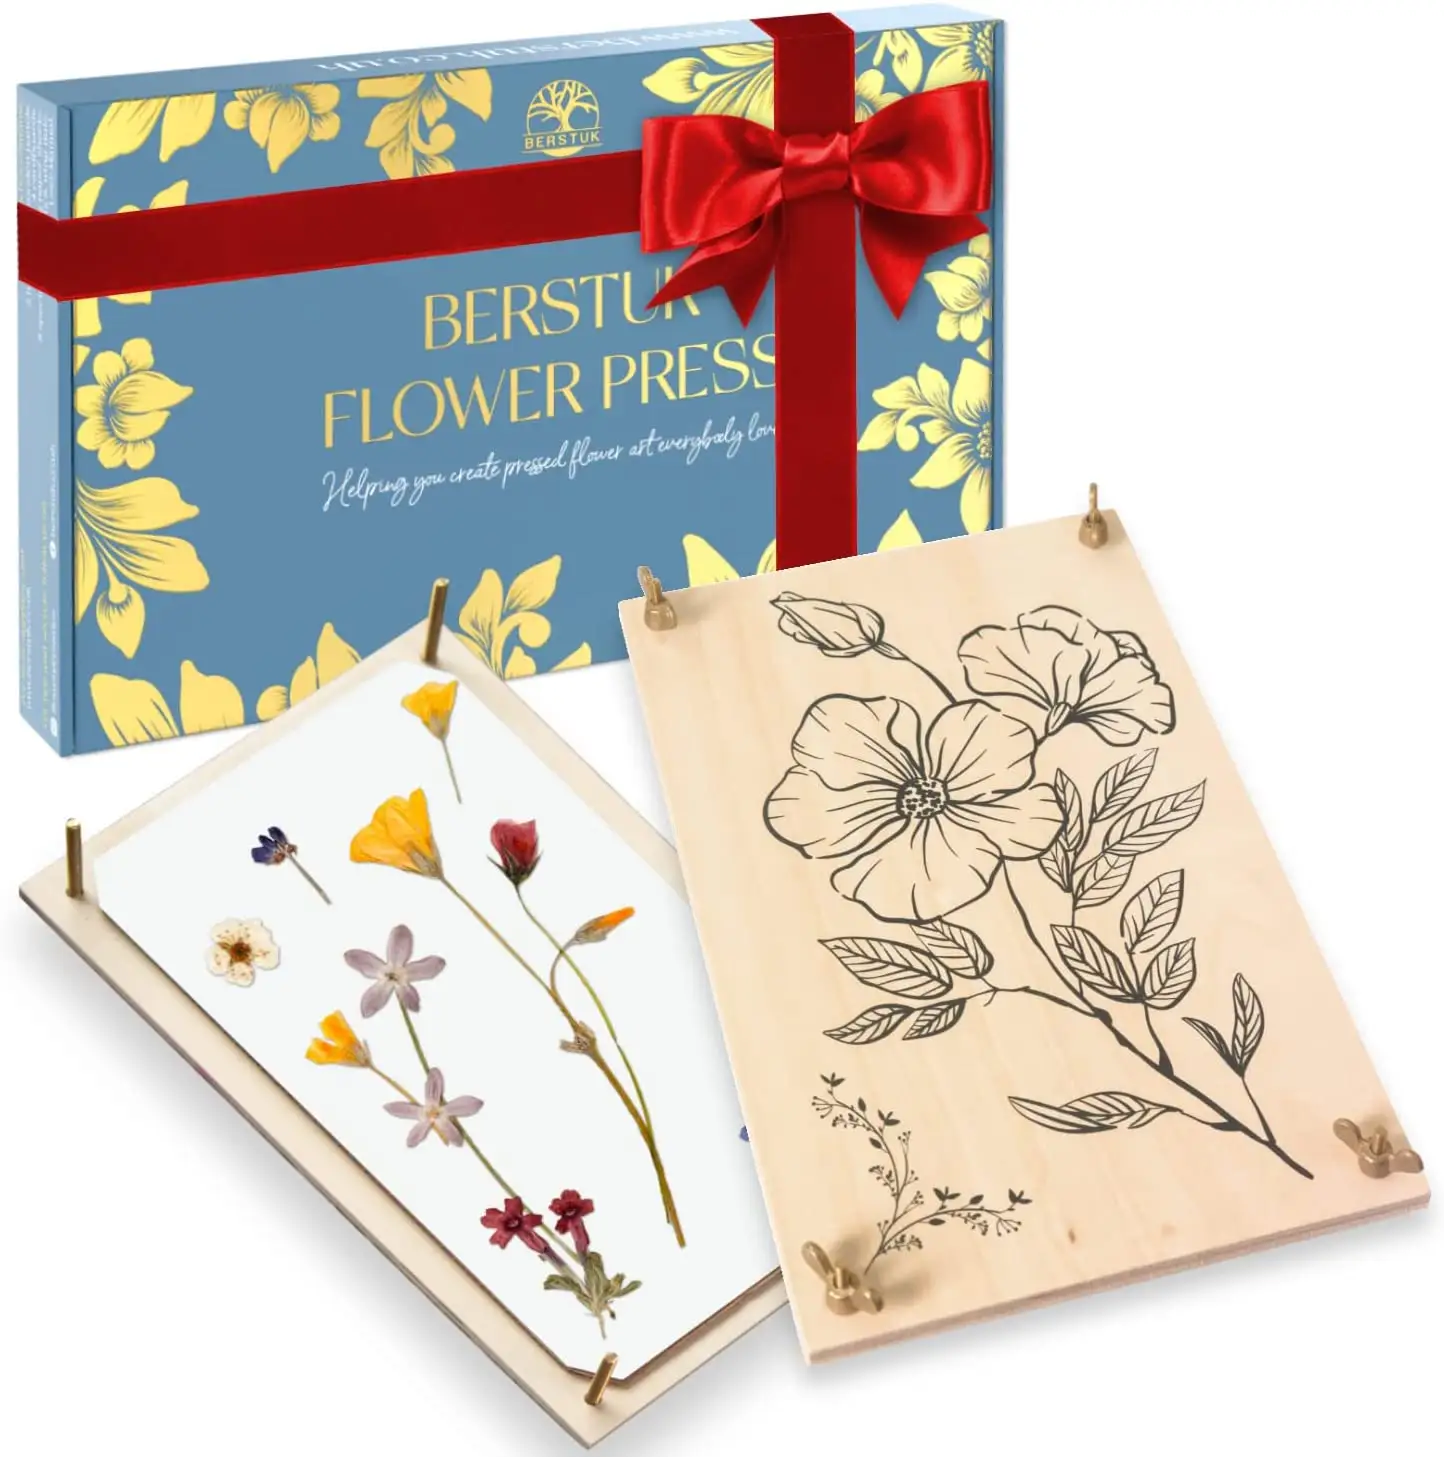 Adult Floral Press Kit Floral Preservation Kit An excellent gift for arts and crafts lovers